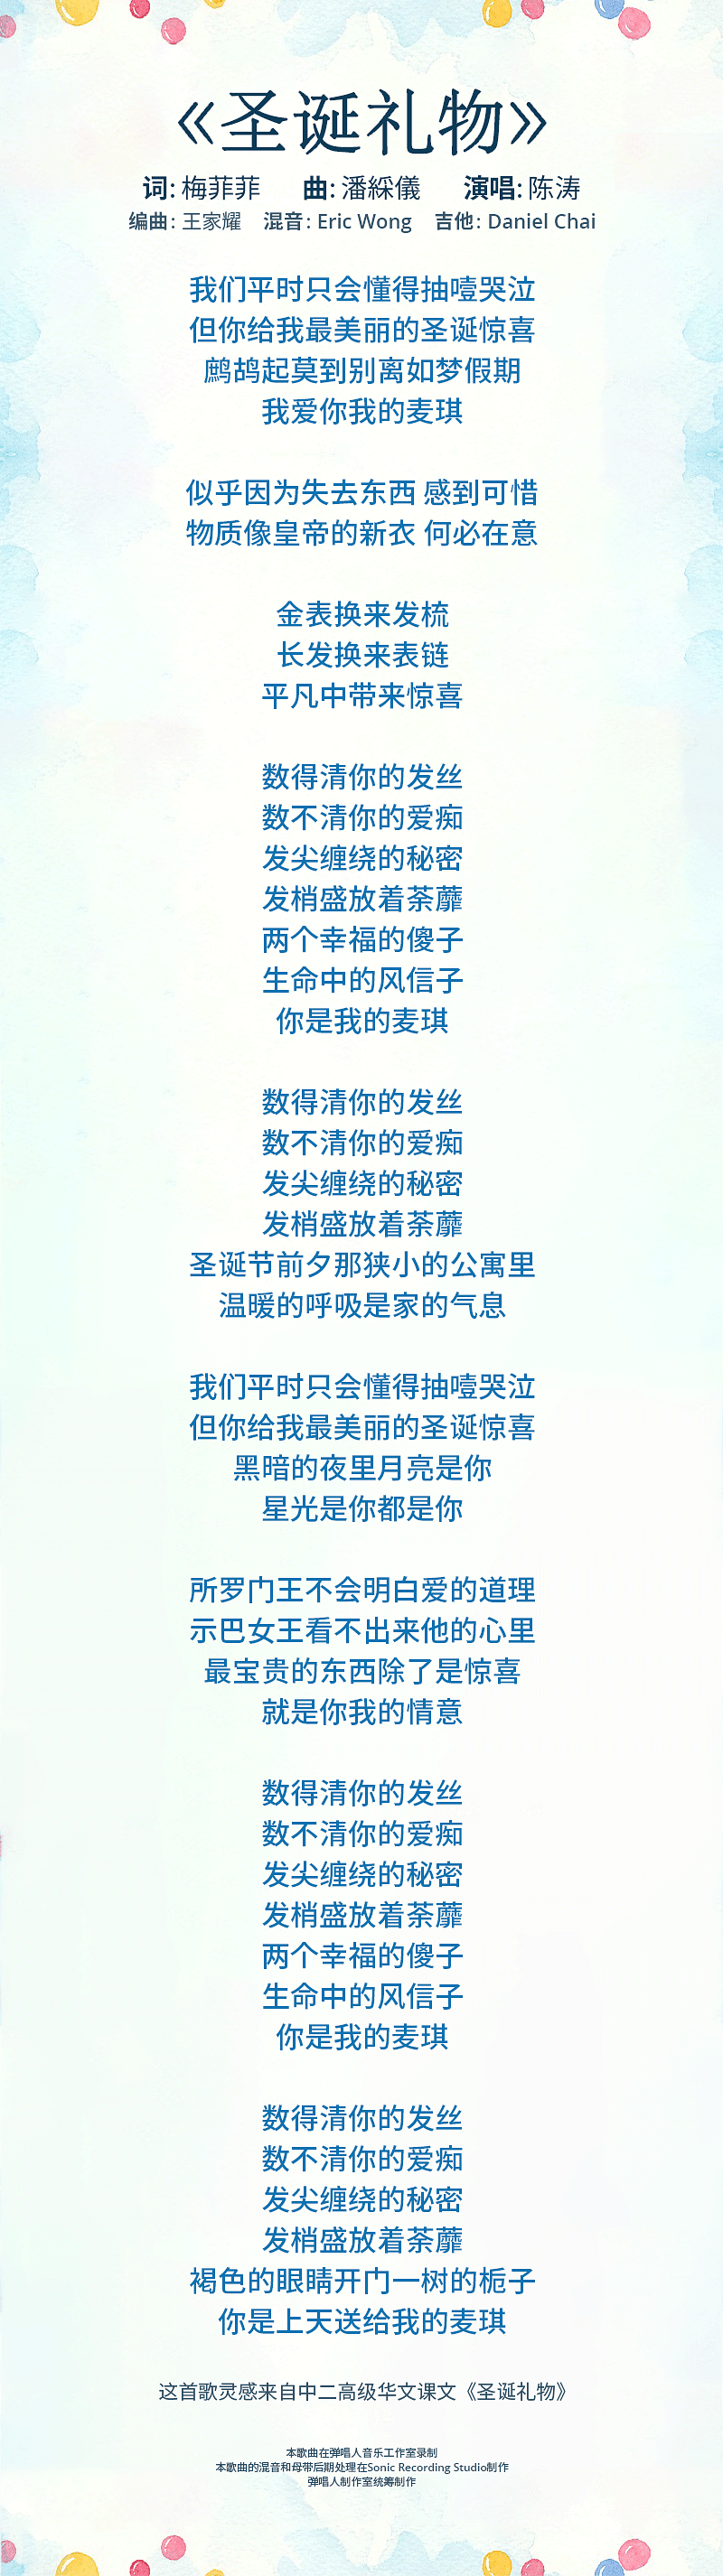 sheng-dan-li-wu-lyrics-mobile.png